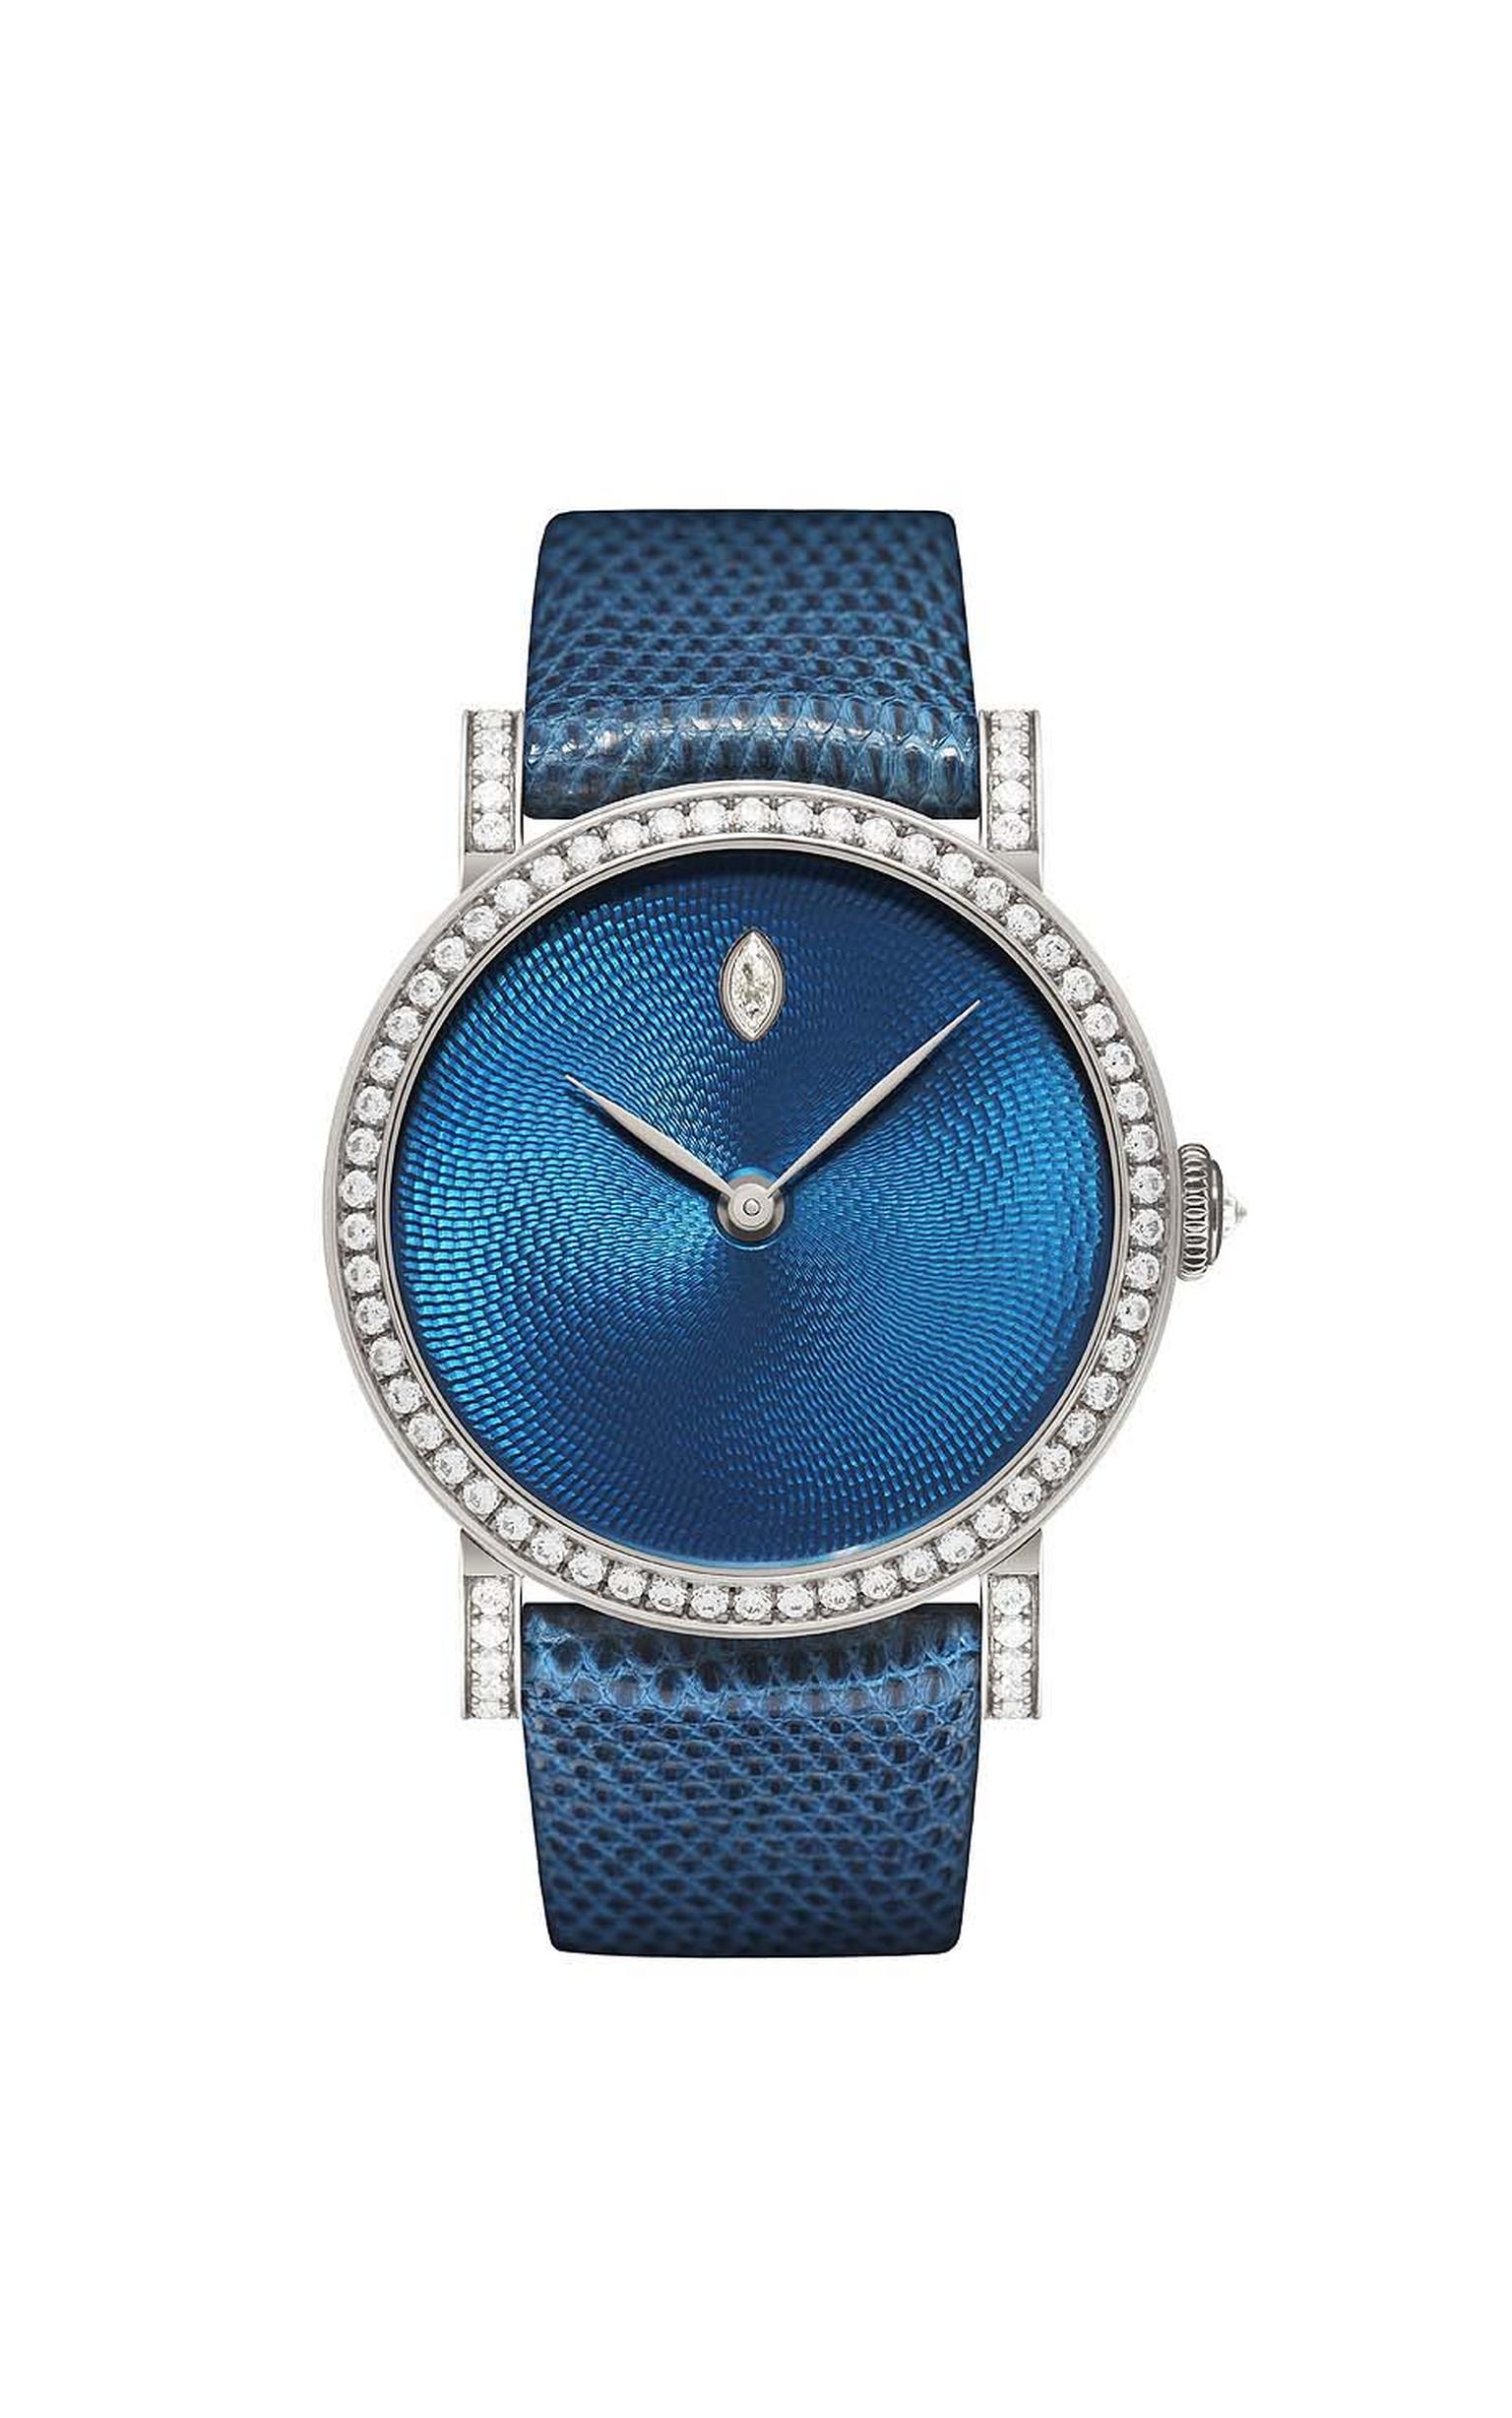 DeLaneau Rondo Translucent Blue automatic watch